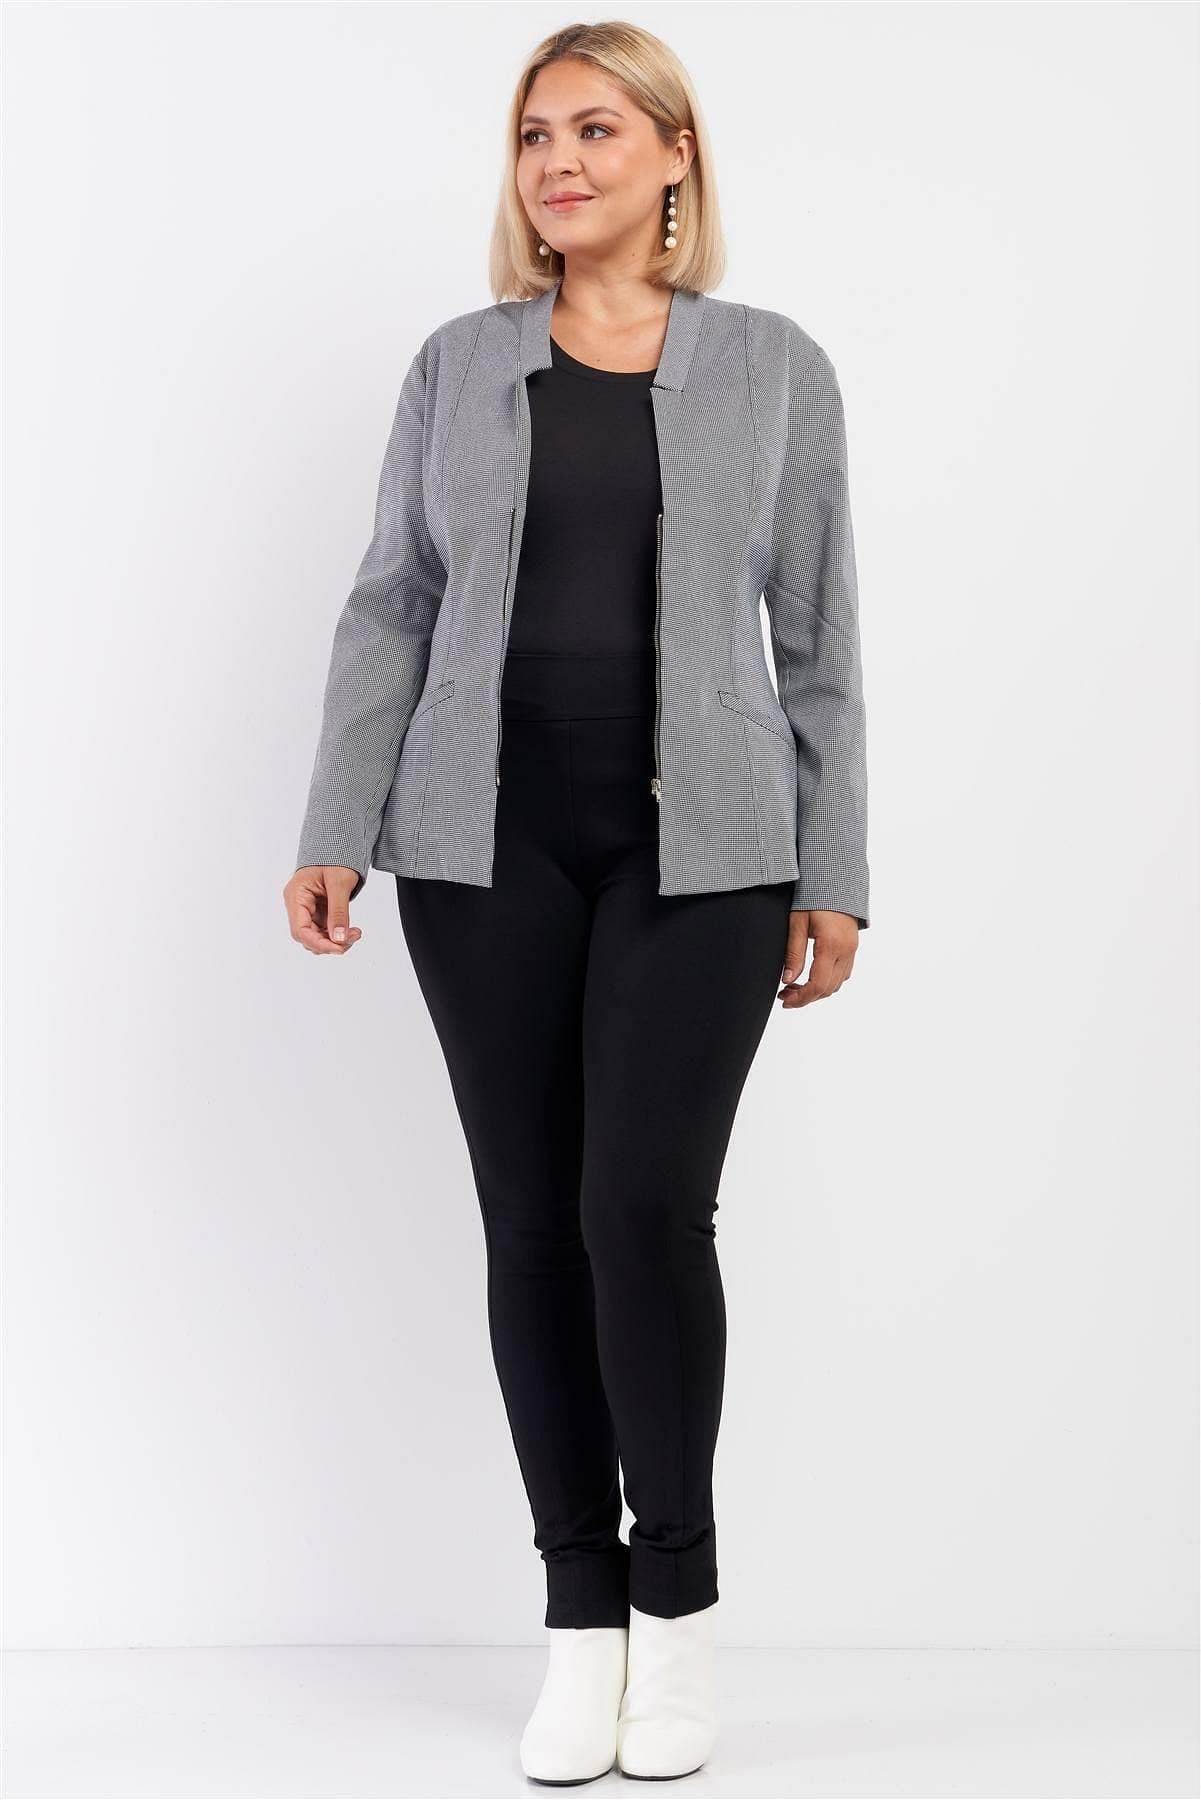 Gray Plus Size Long Sleeve Jacket - Shopping Therapy 2XL Jacket